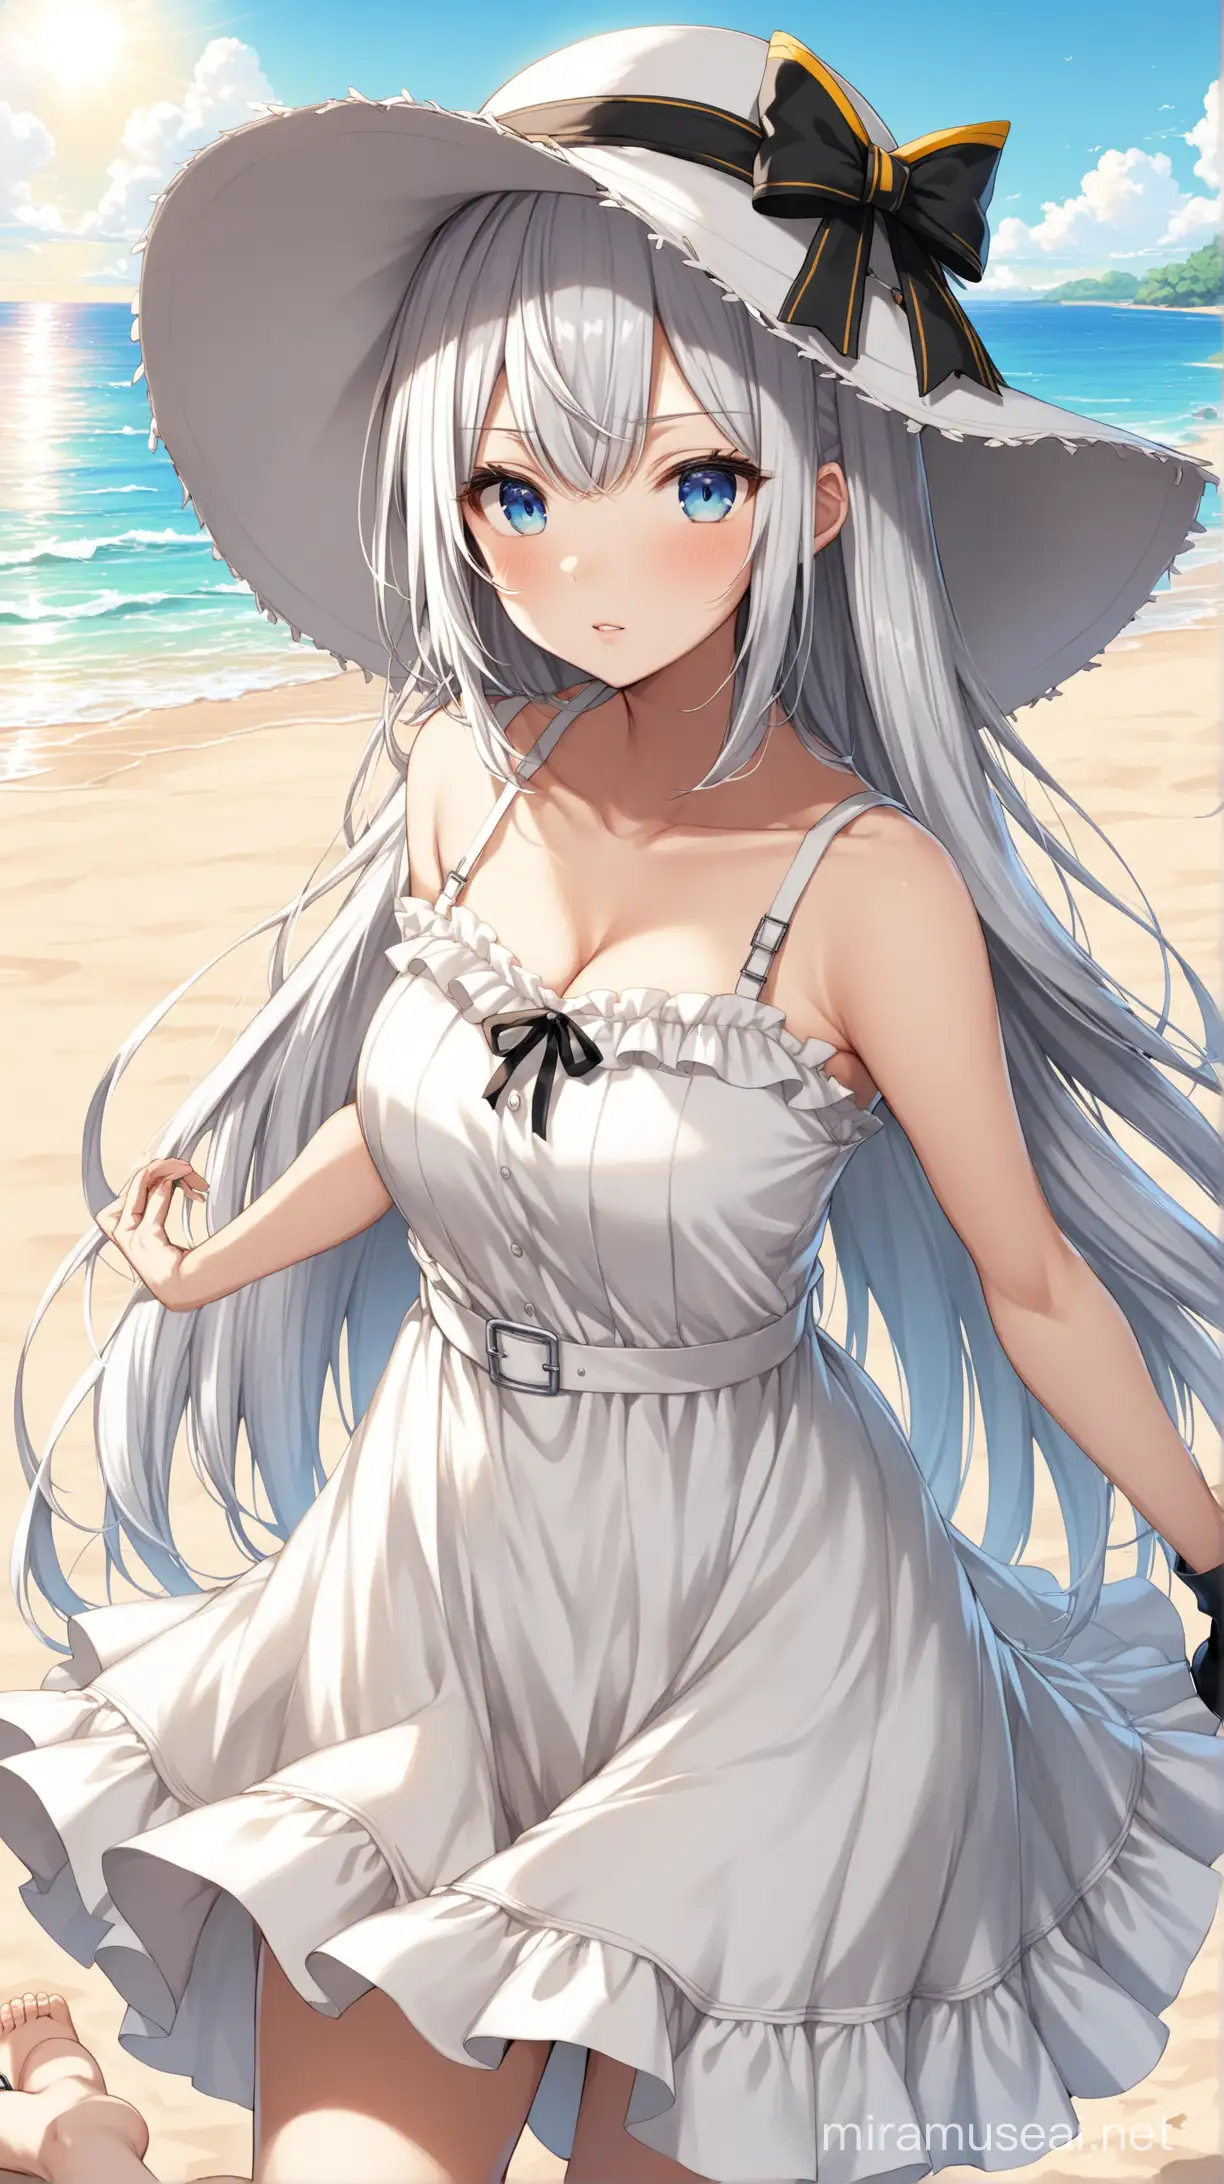 Elegant Kei Shirogane Inspired Portrait with White Sundress and Beach Hat